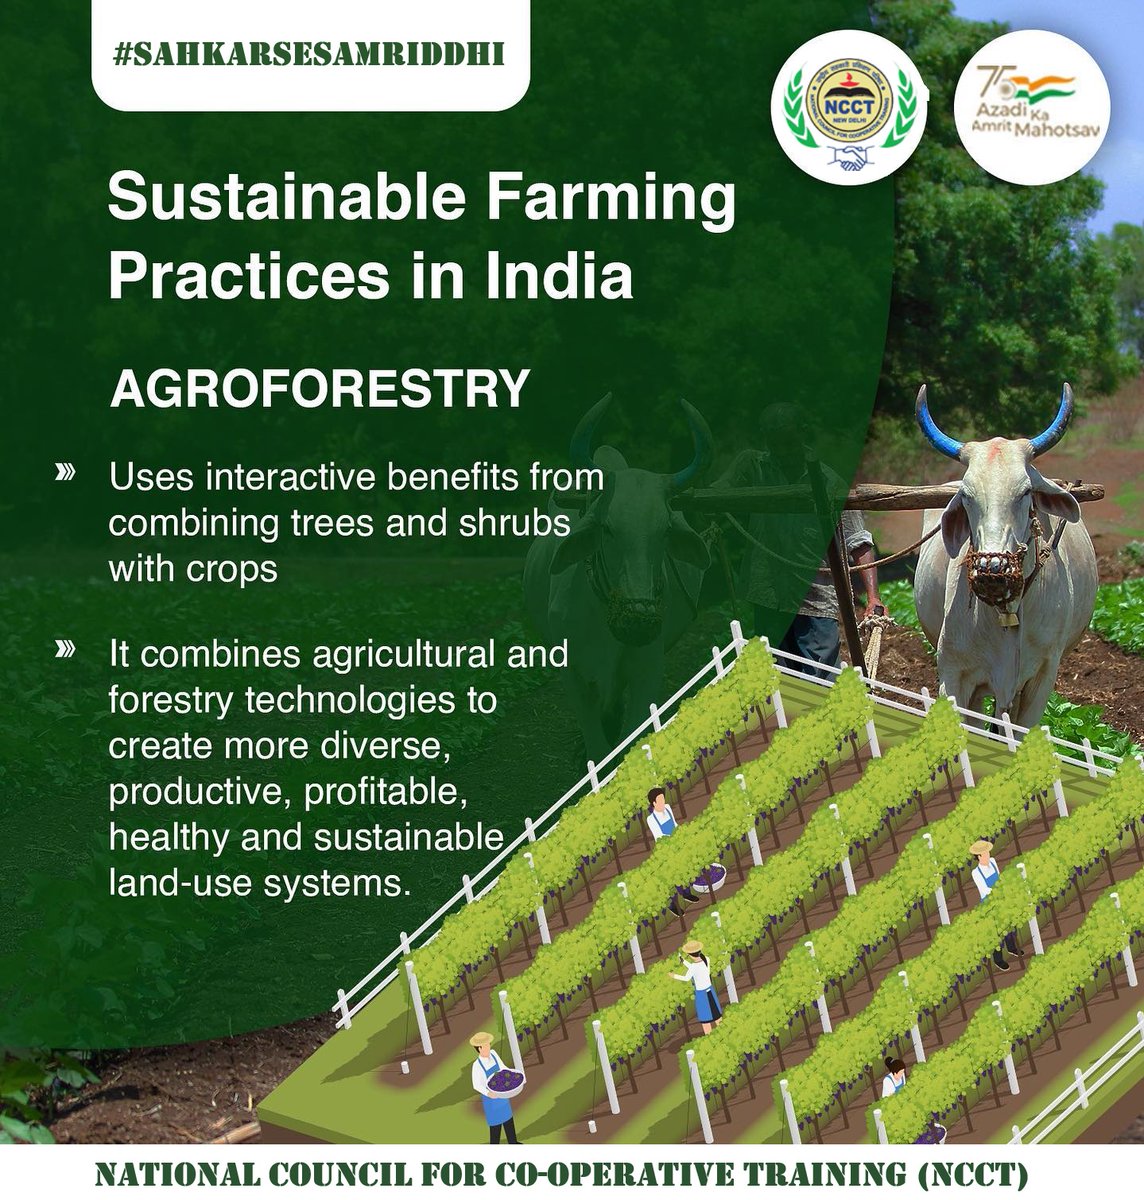 #Sustainable Farming Practices in india.
#cooperative #सहकारसेसमृद्धि #SahkarSeSamriddhi #NCCT #minofcooperatn #सहकारिता_मंत्रालय #Farming  #Farmers